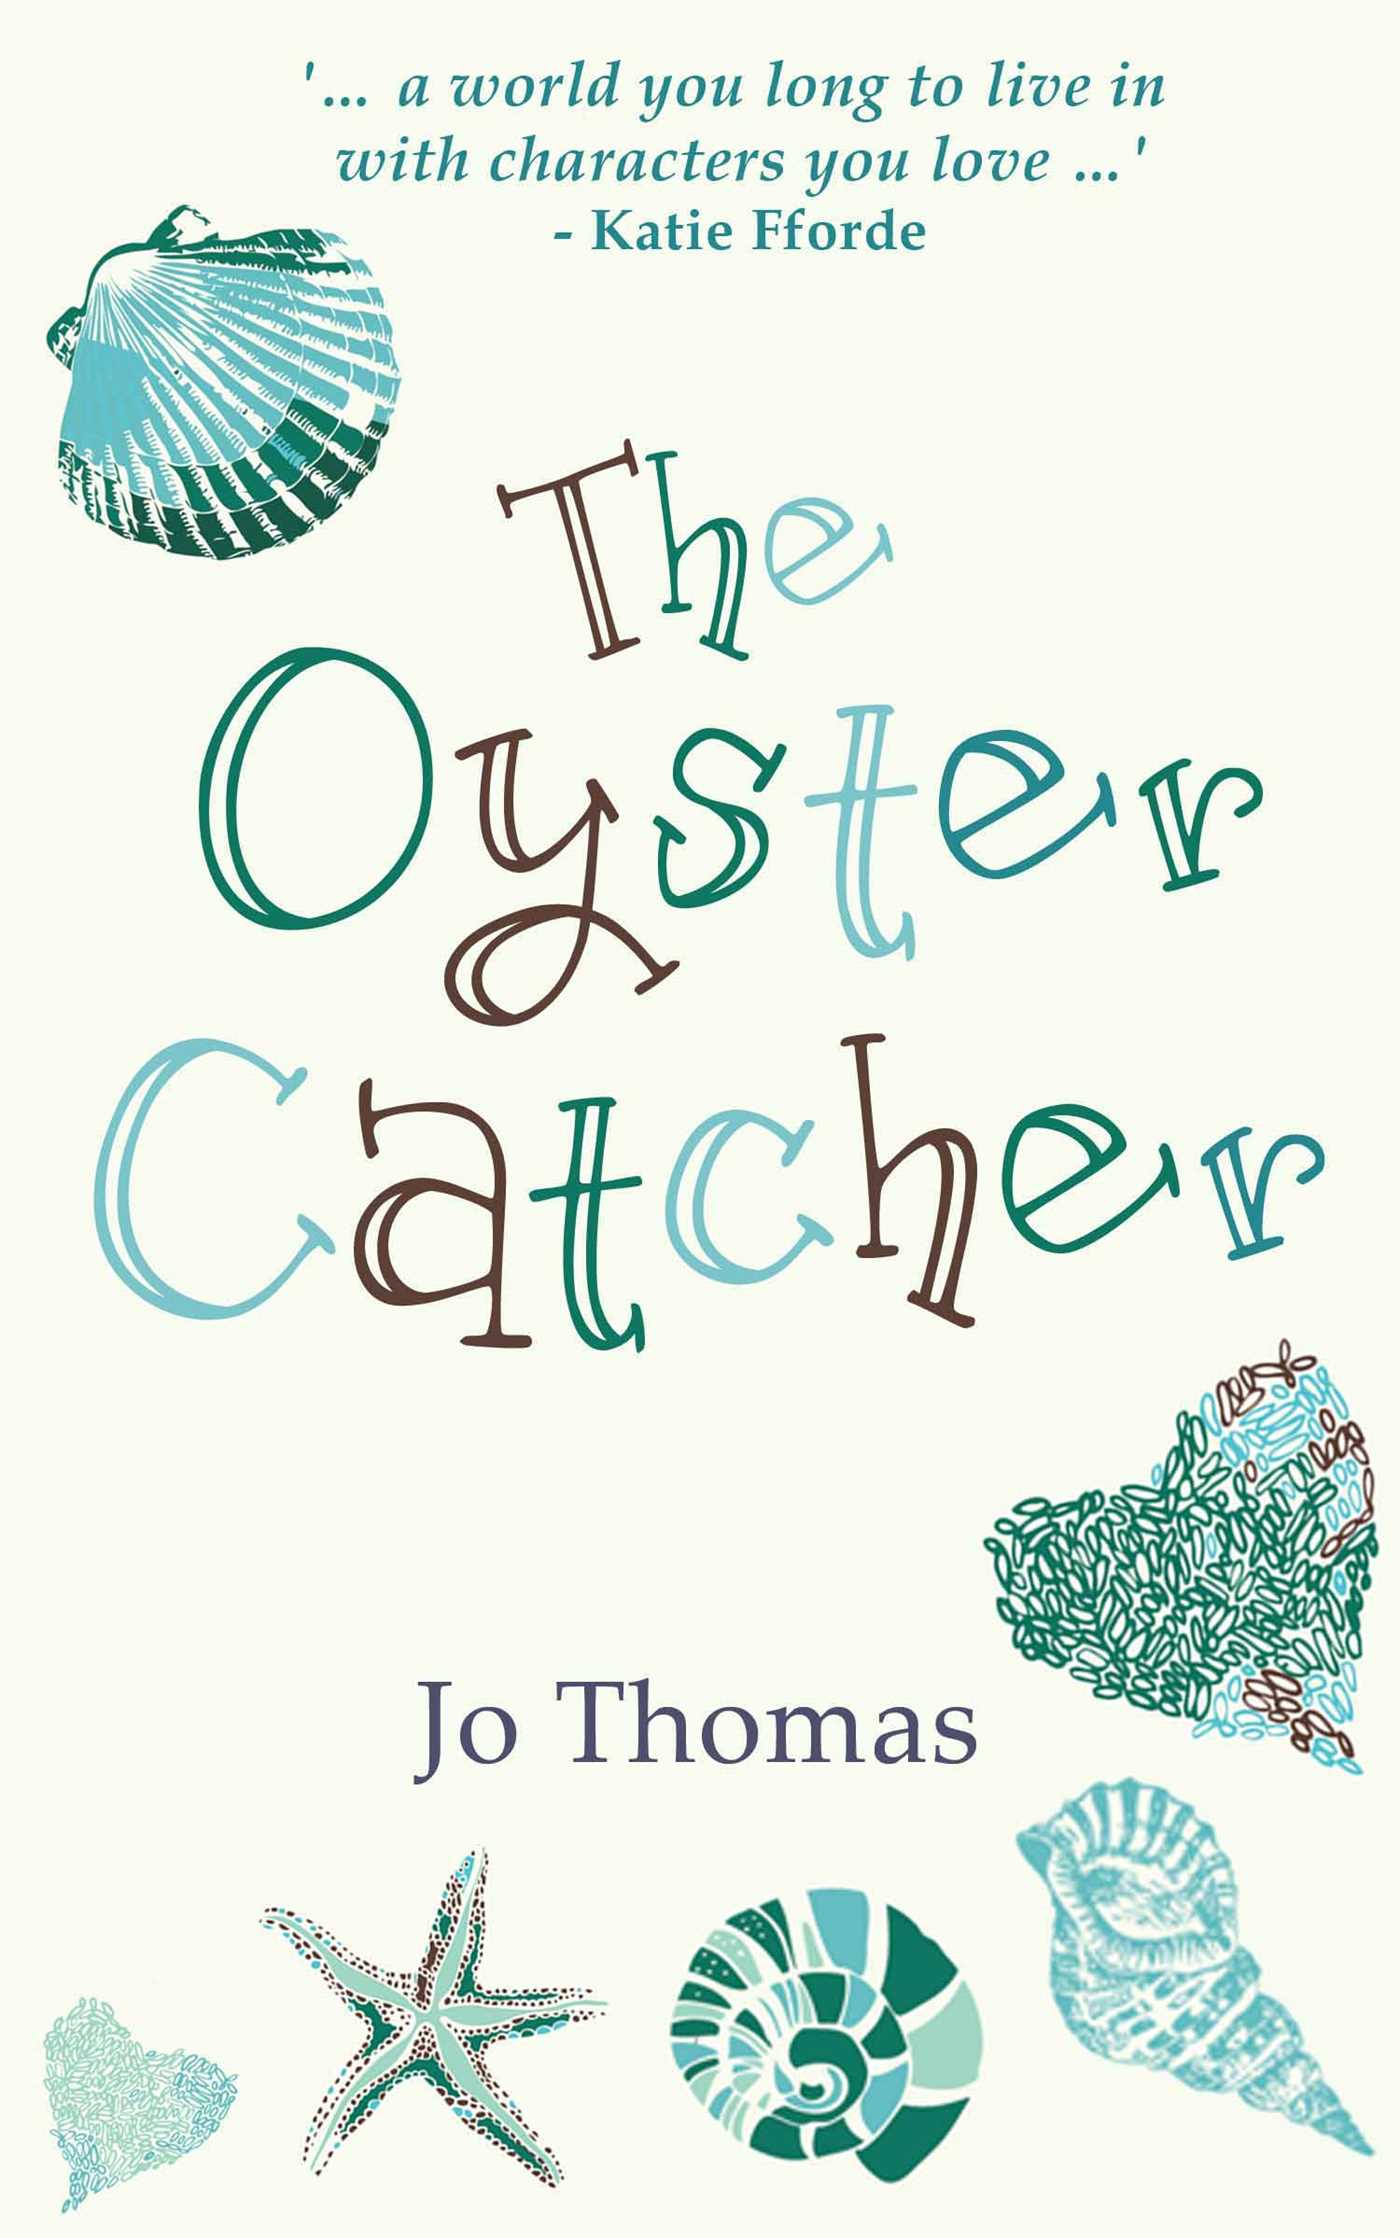 Oyster Catcher